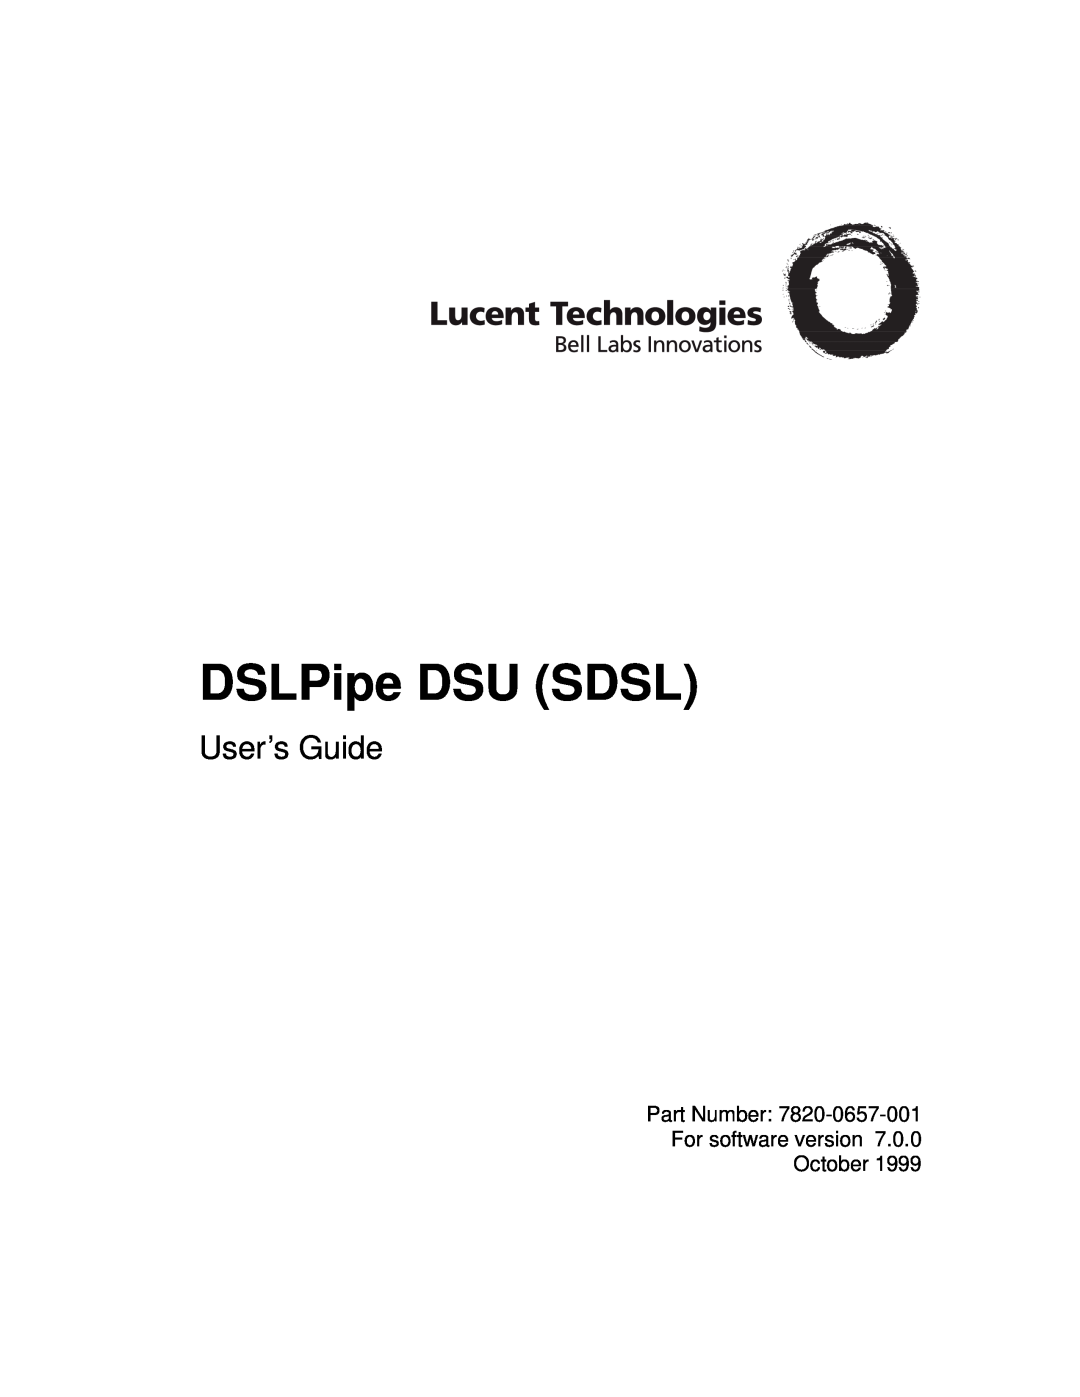 Lucent Technologies 7820-0657-001 manual DSLPipe DSU SDSL, User’s Guide, Part Number For software version October 